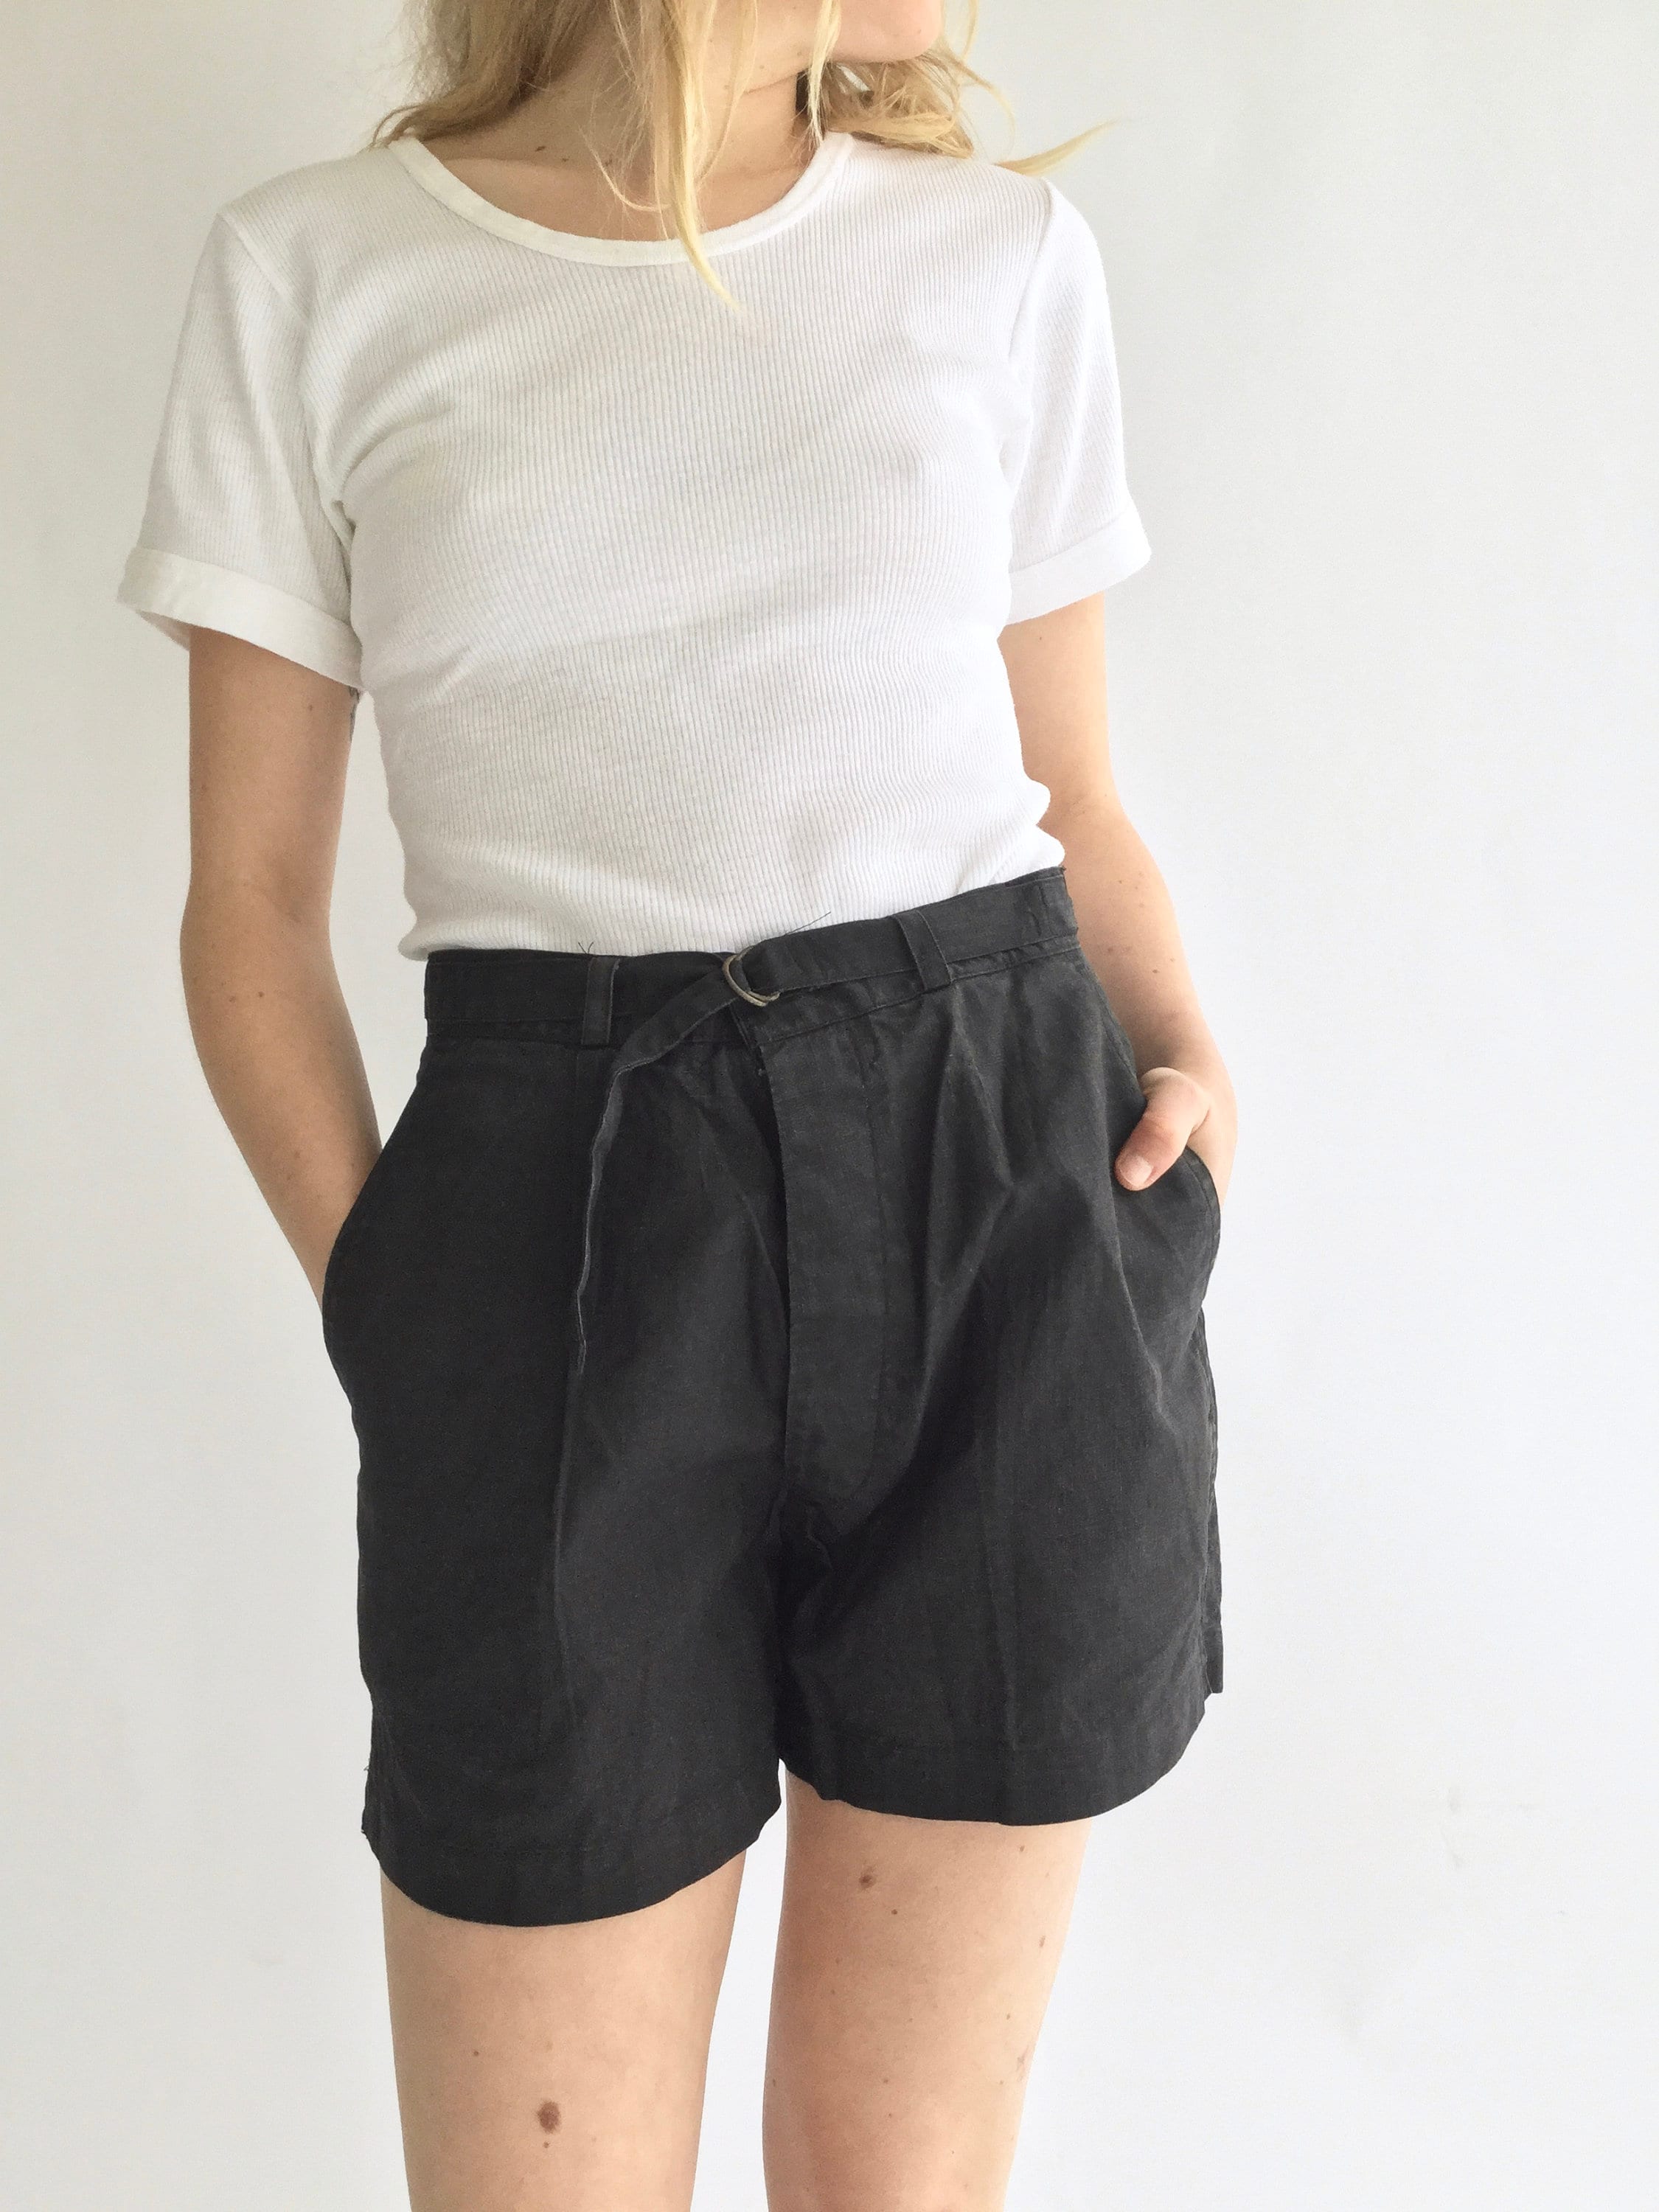 Vintage 26 27 28 30 31 Waist Black Cotton Blend Belt Shorts | Etsy